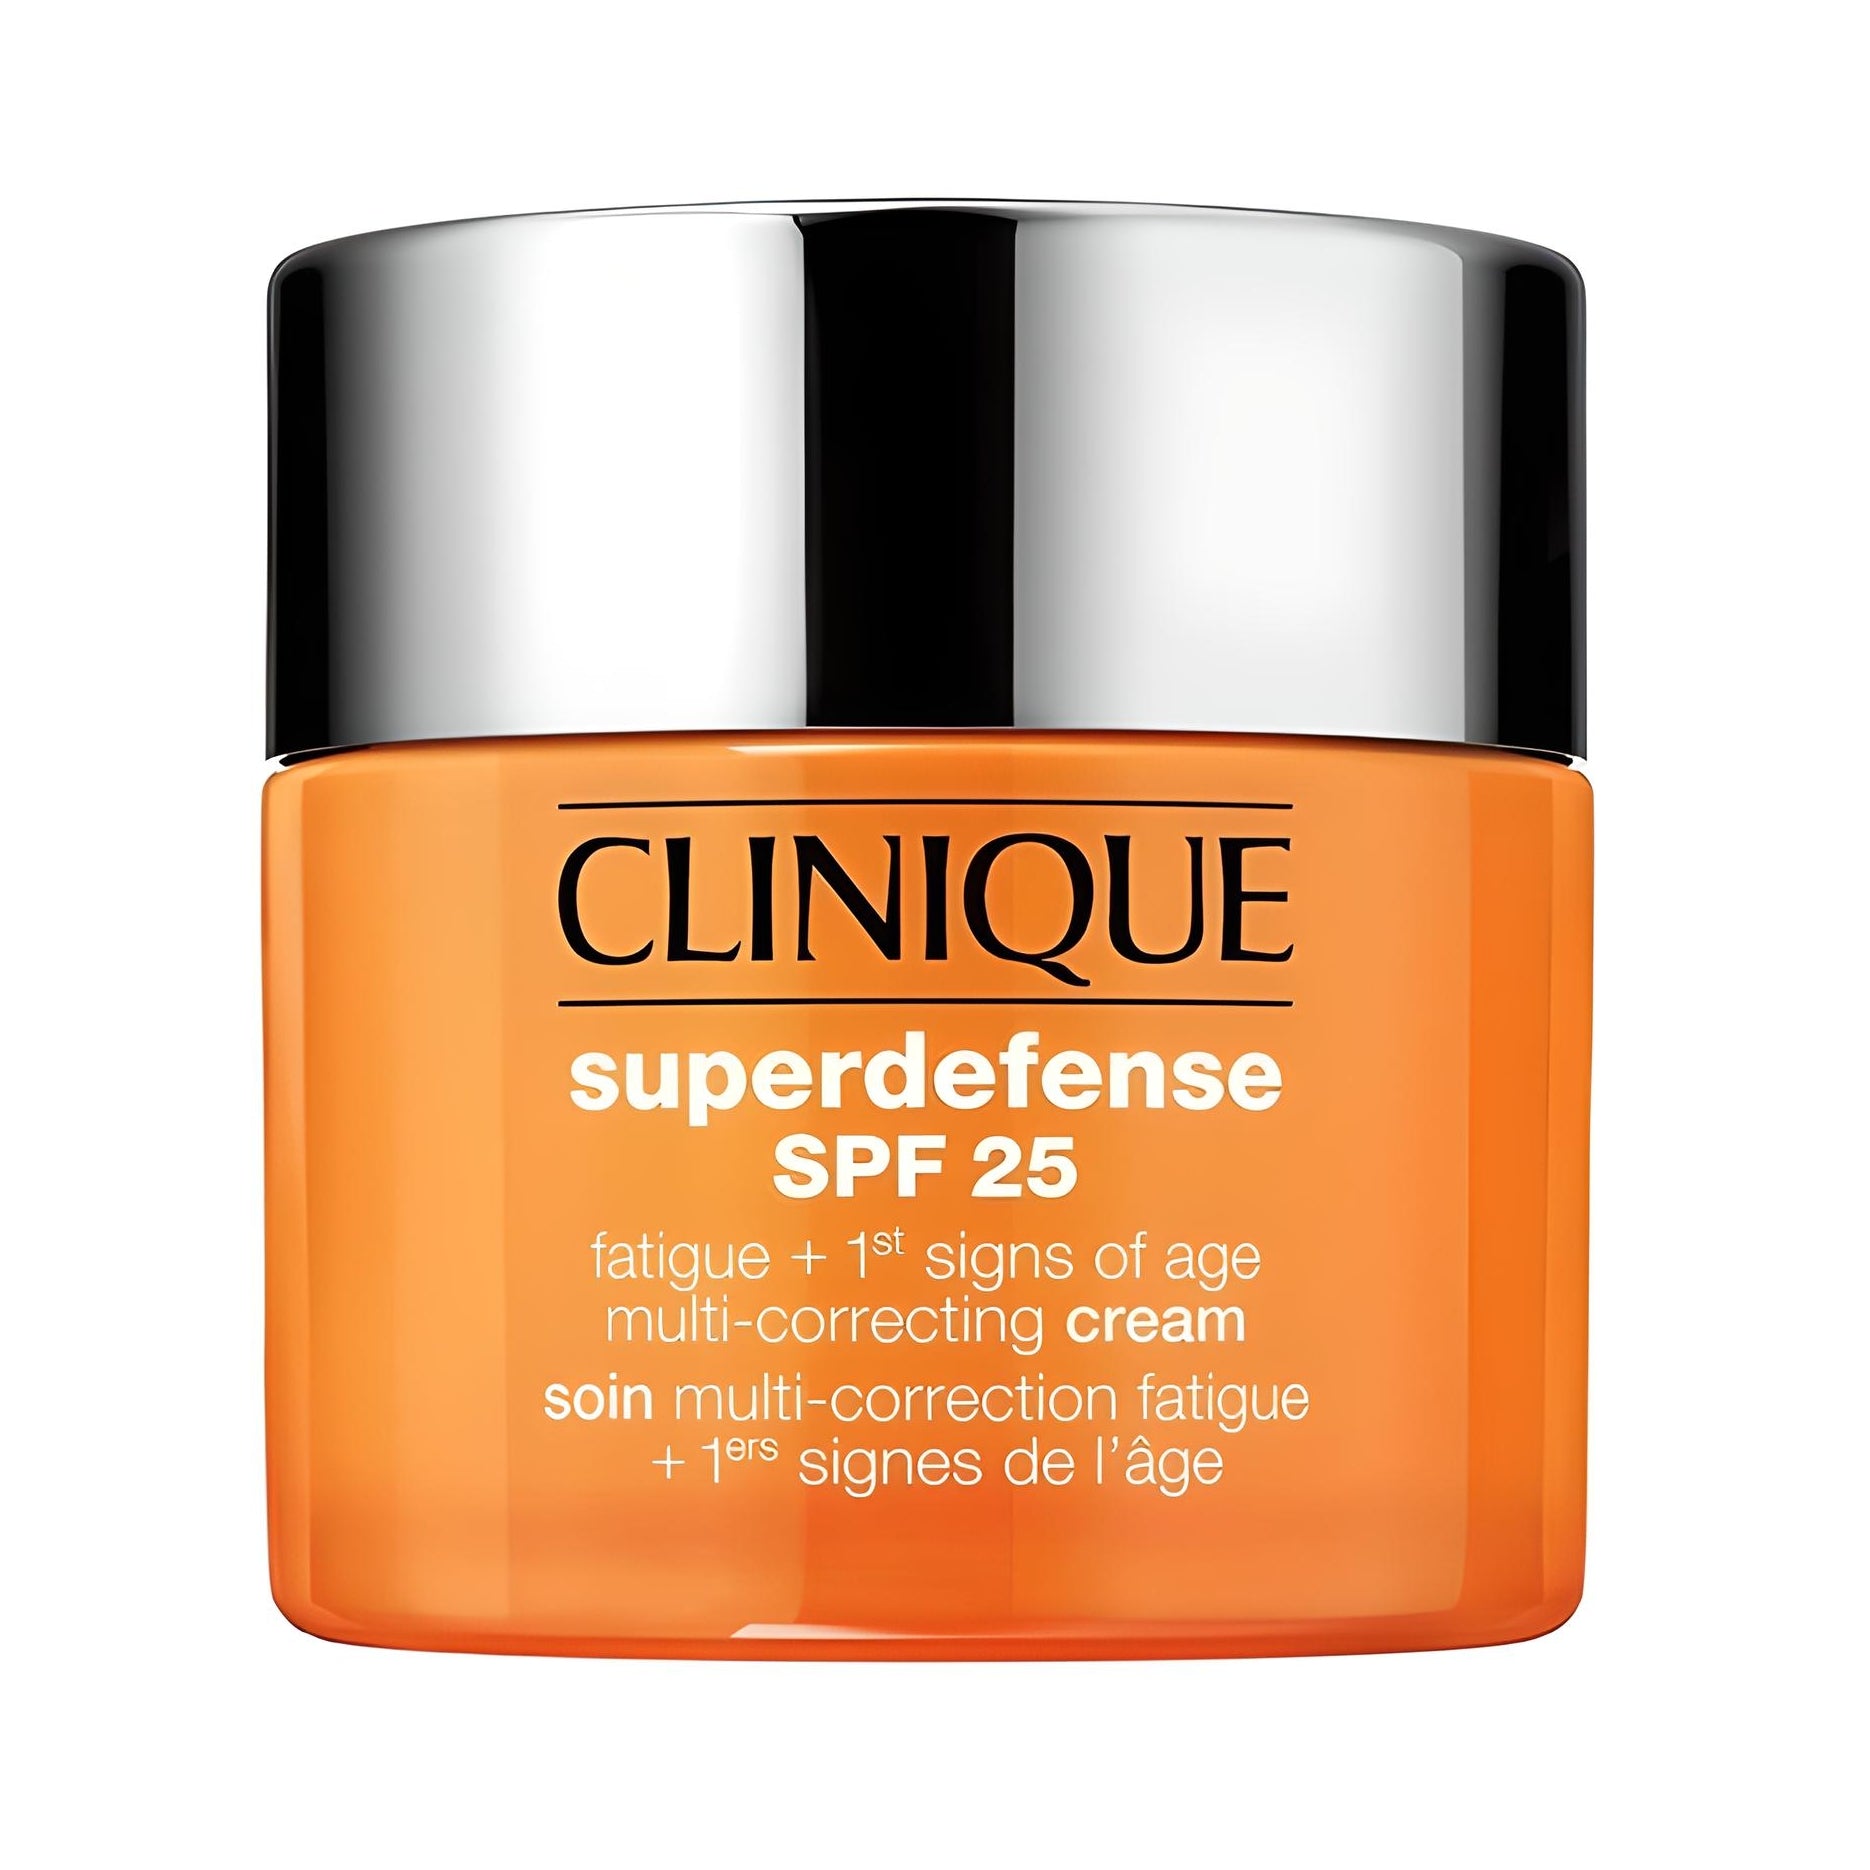 SUPERDEFENSE SPF25 multi-correcting cream III/IV Gesichtspflege CLINIQUE   